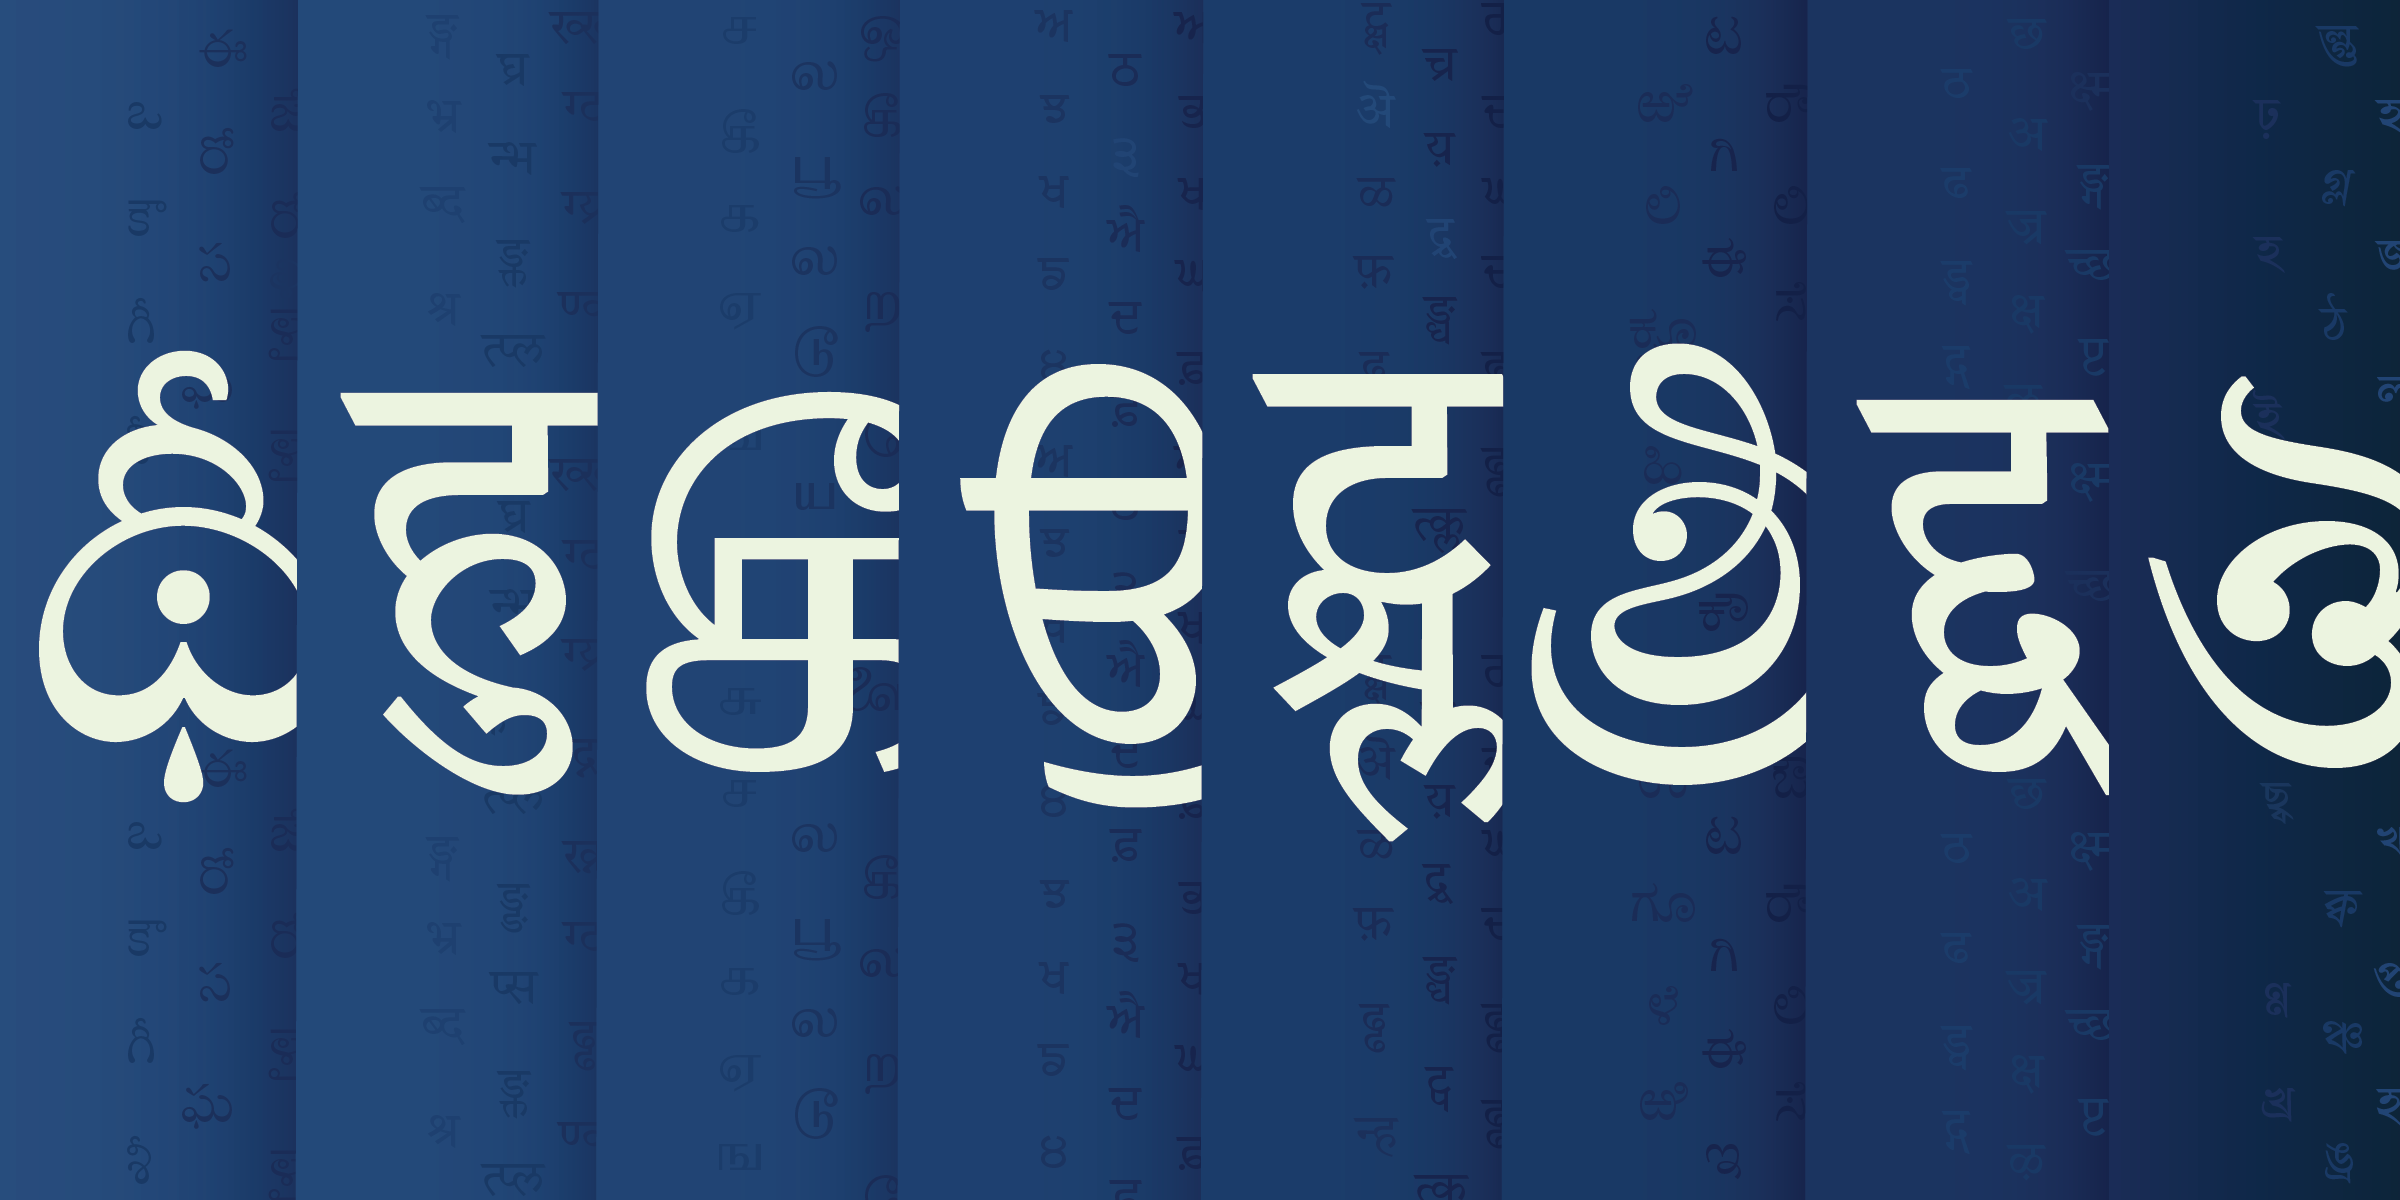 Tiro-url-new-Indic-fonts_slug_feature